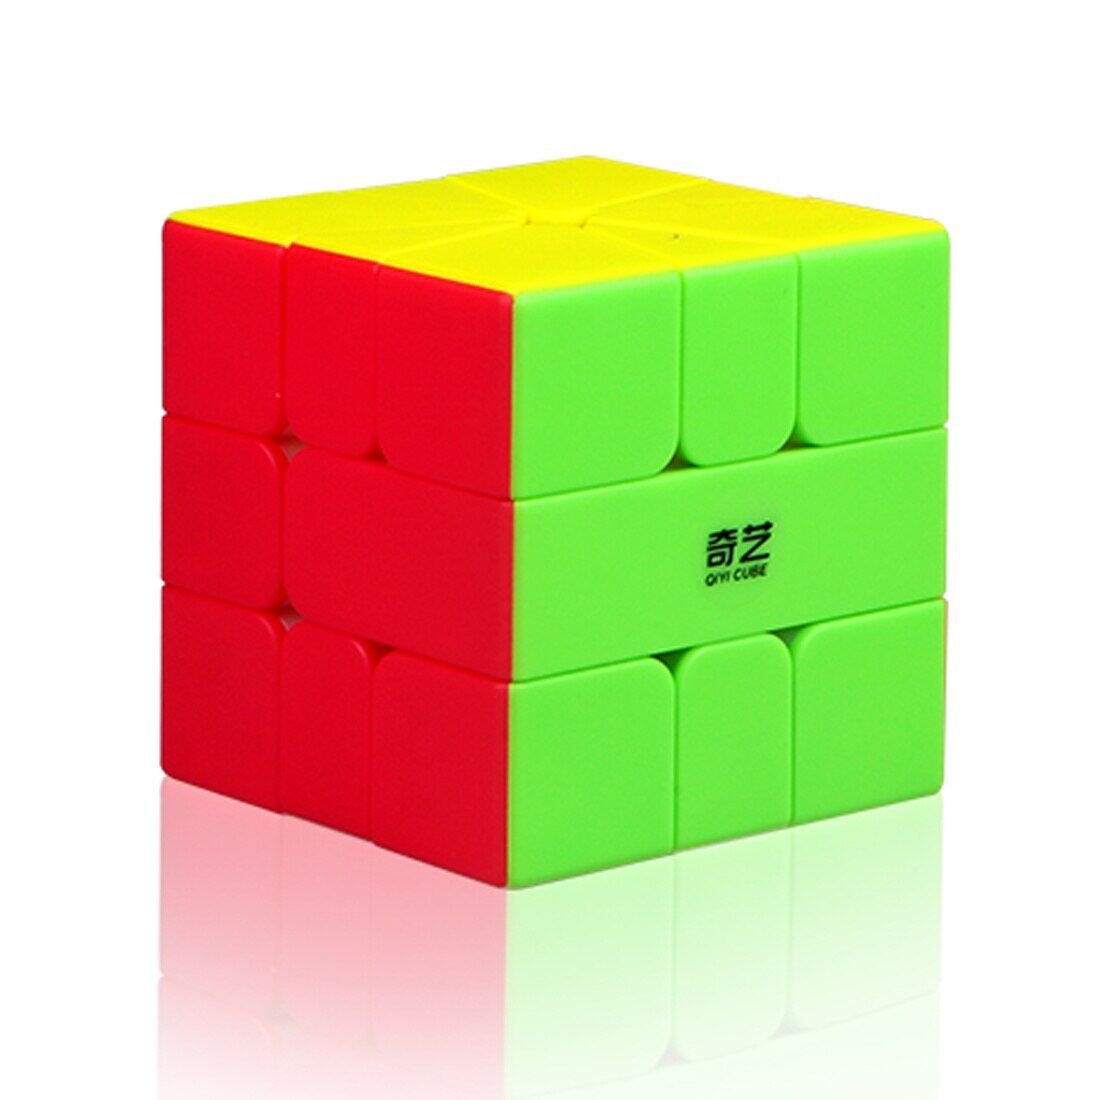 Cubo Rubik Square 1 Qiyi Qifa Stickerless Original Sq1_0